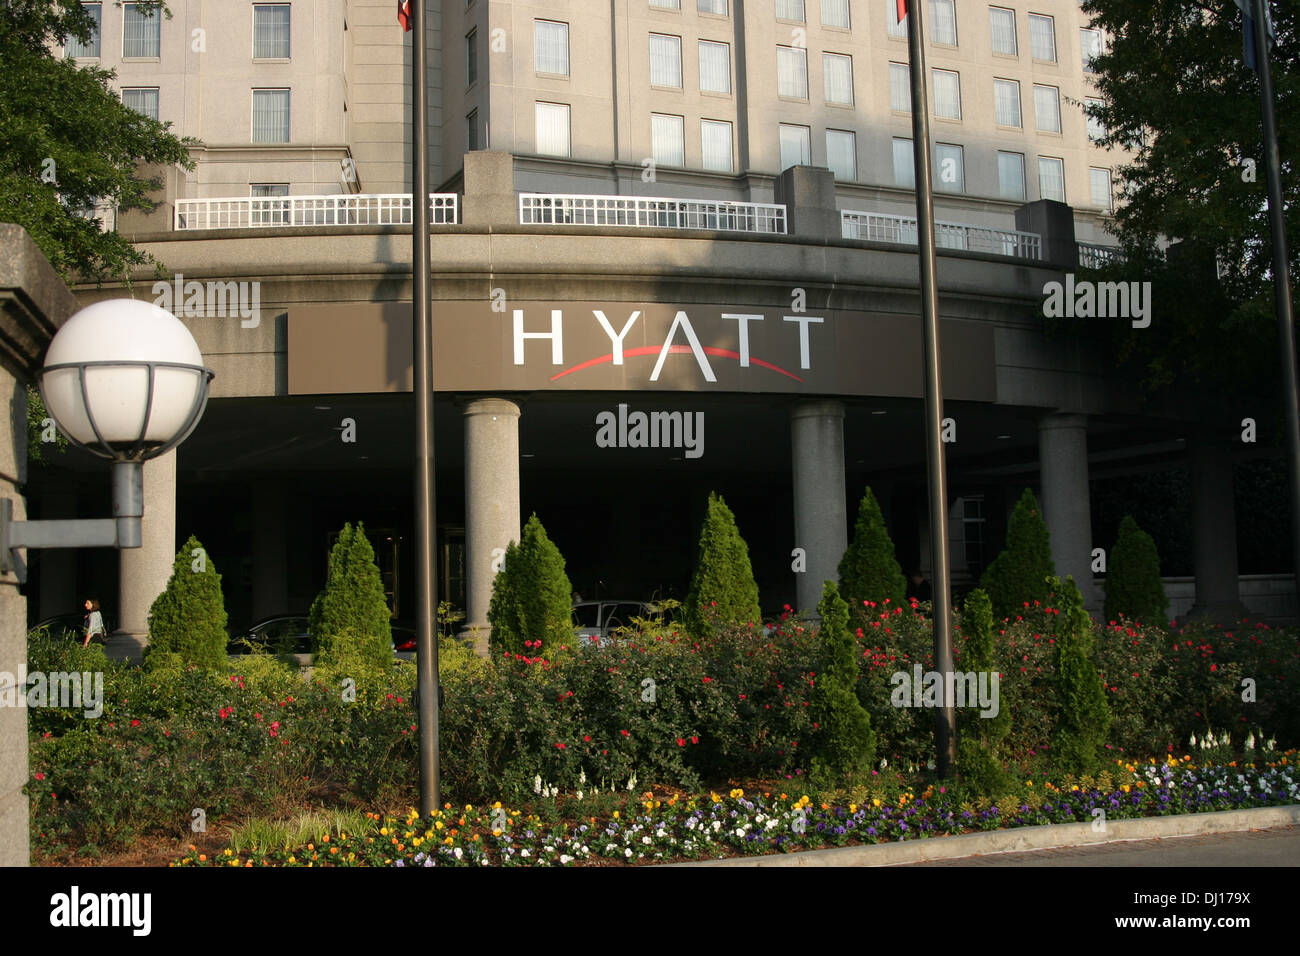 hyatt hotels Stock Photo